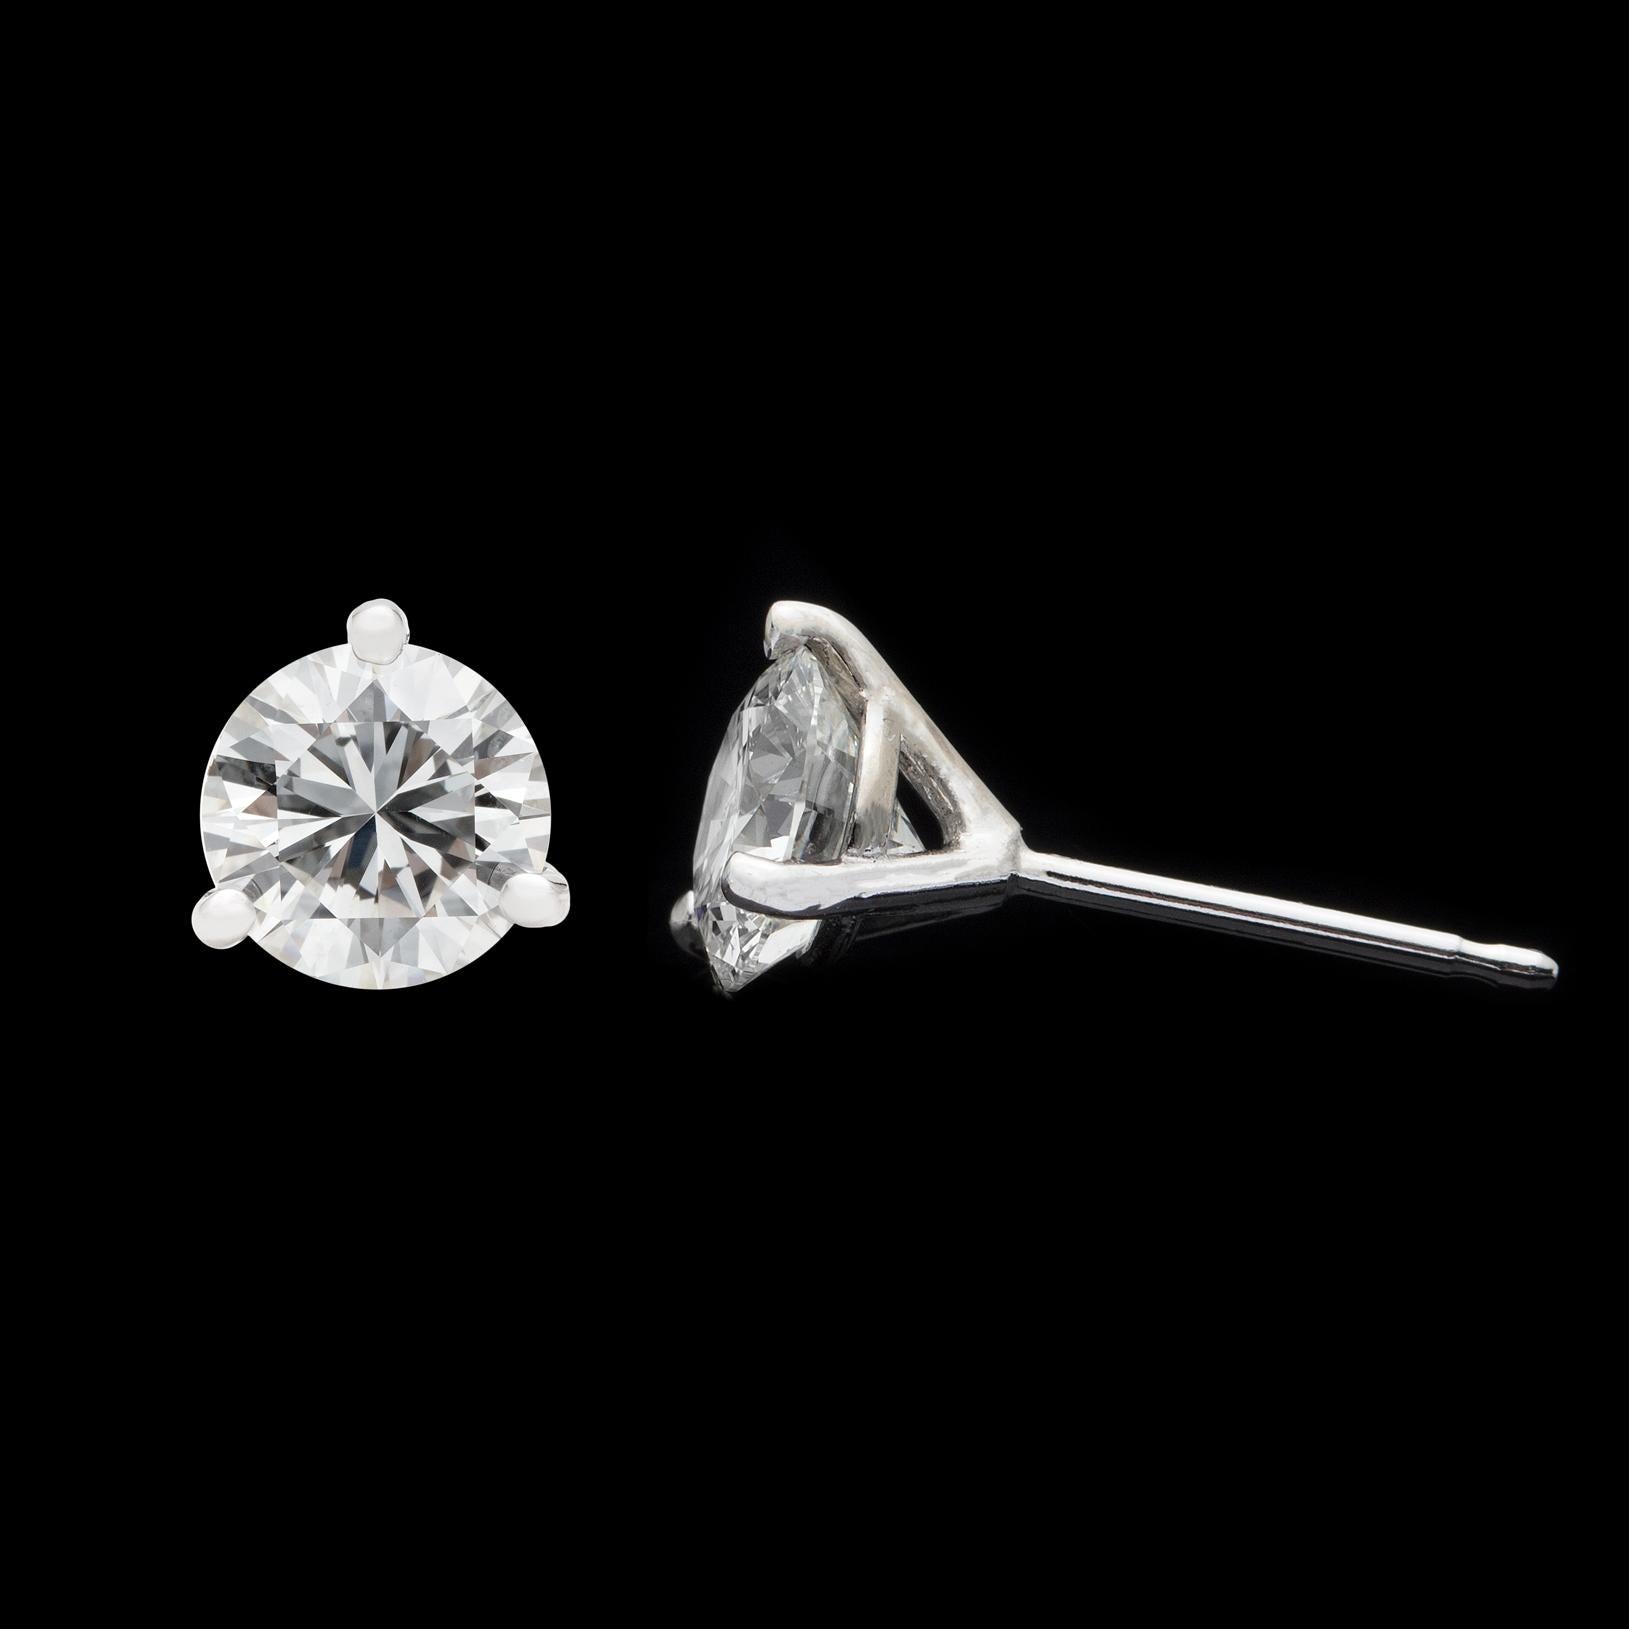 Extraordinaires clous en diamants GIA de 3,12 carats en vente 1